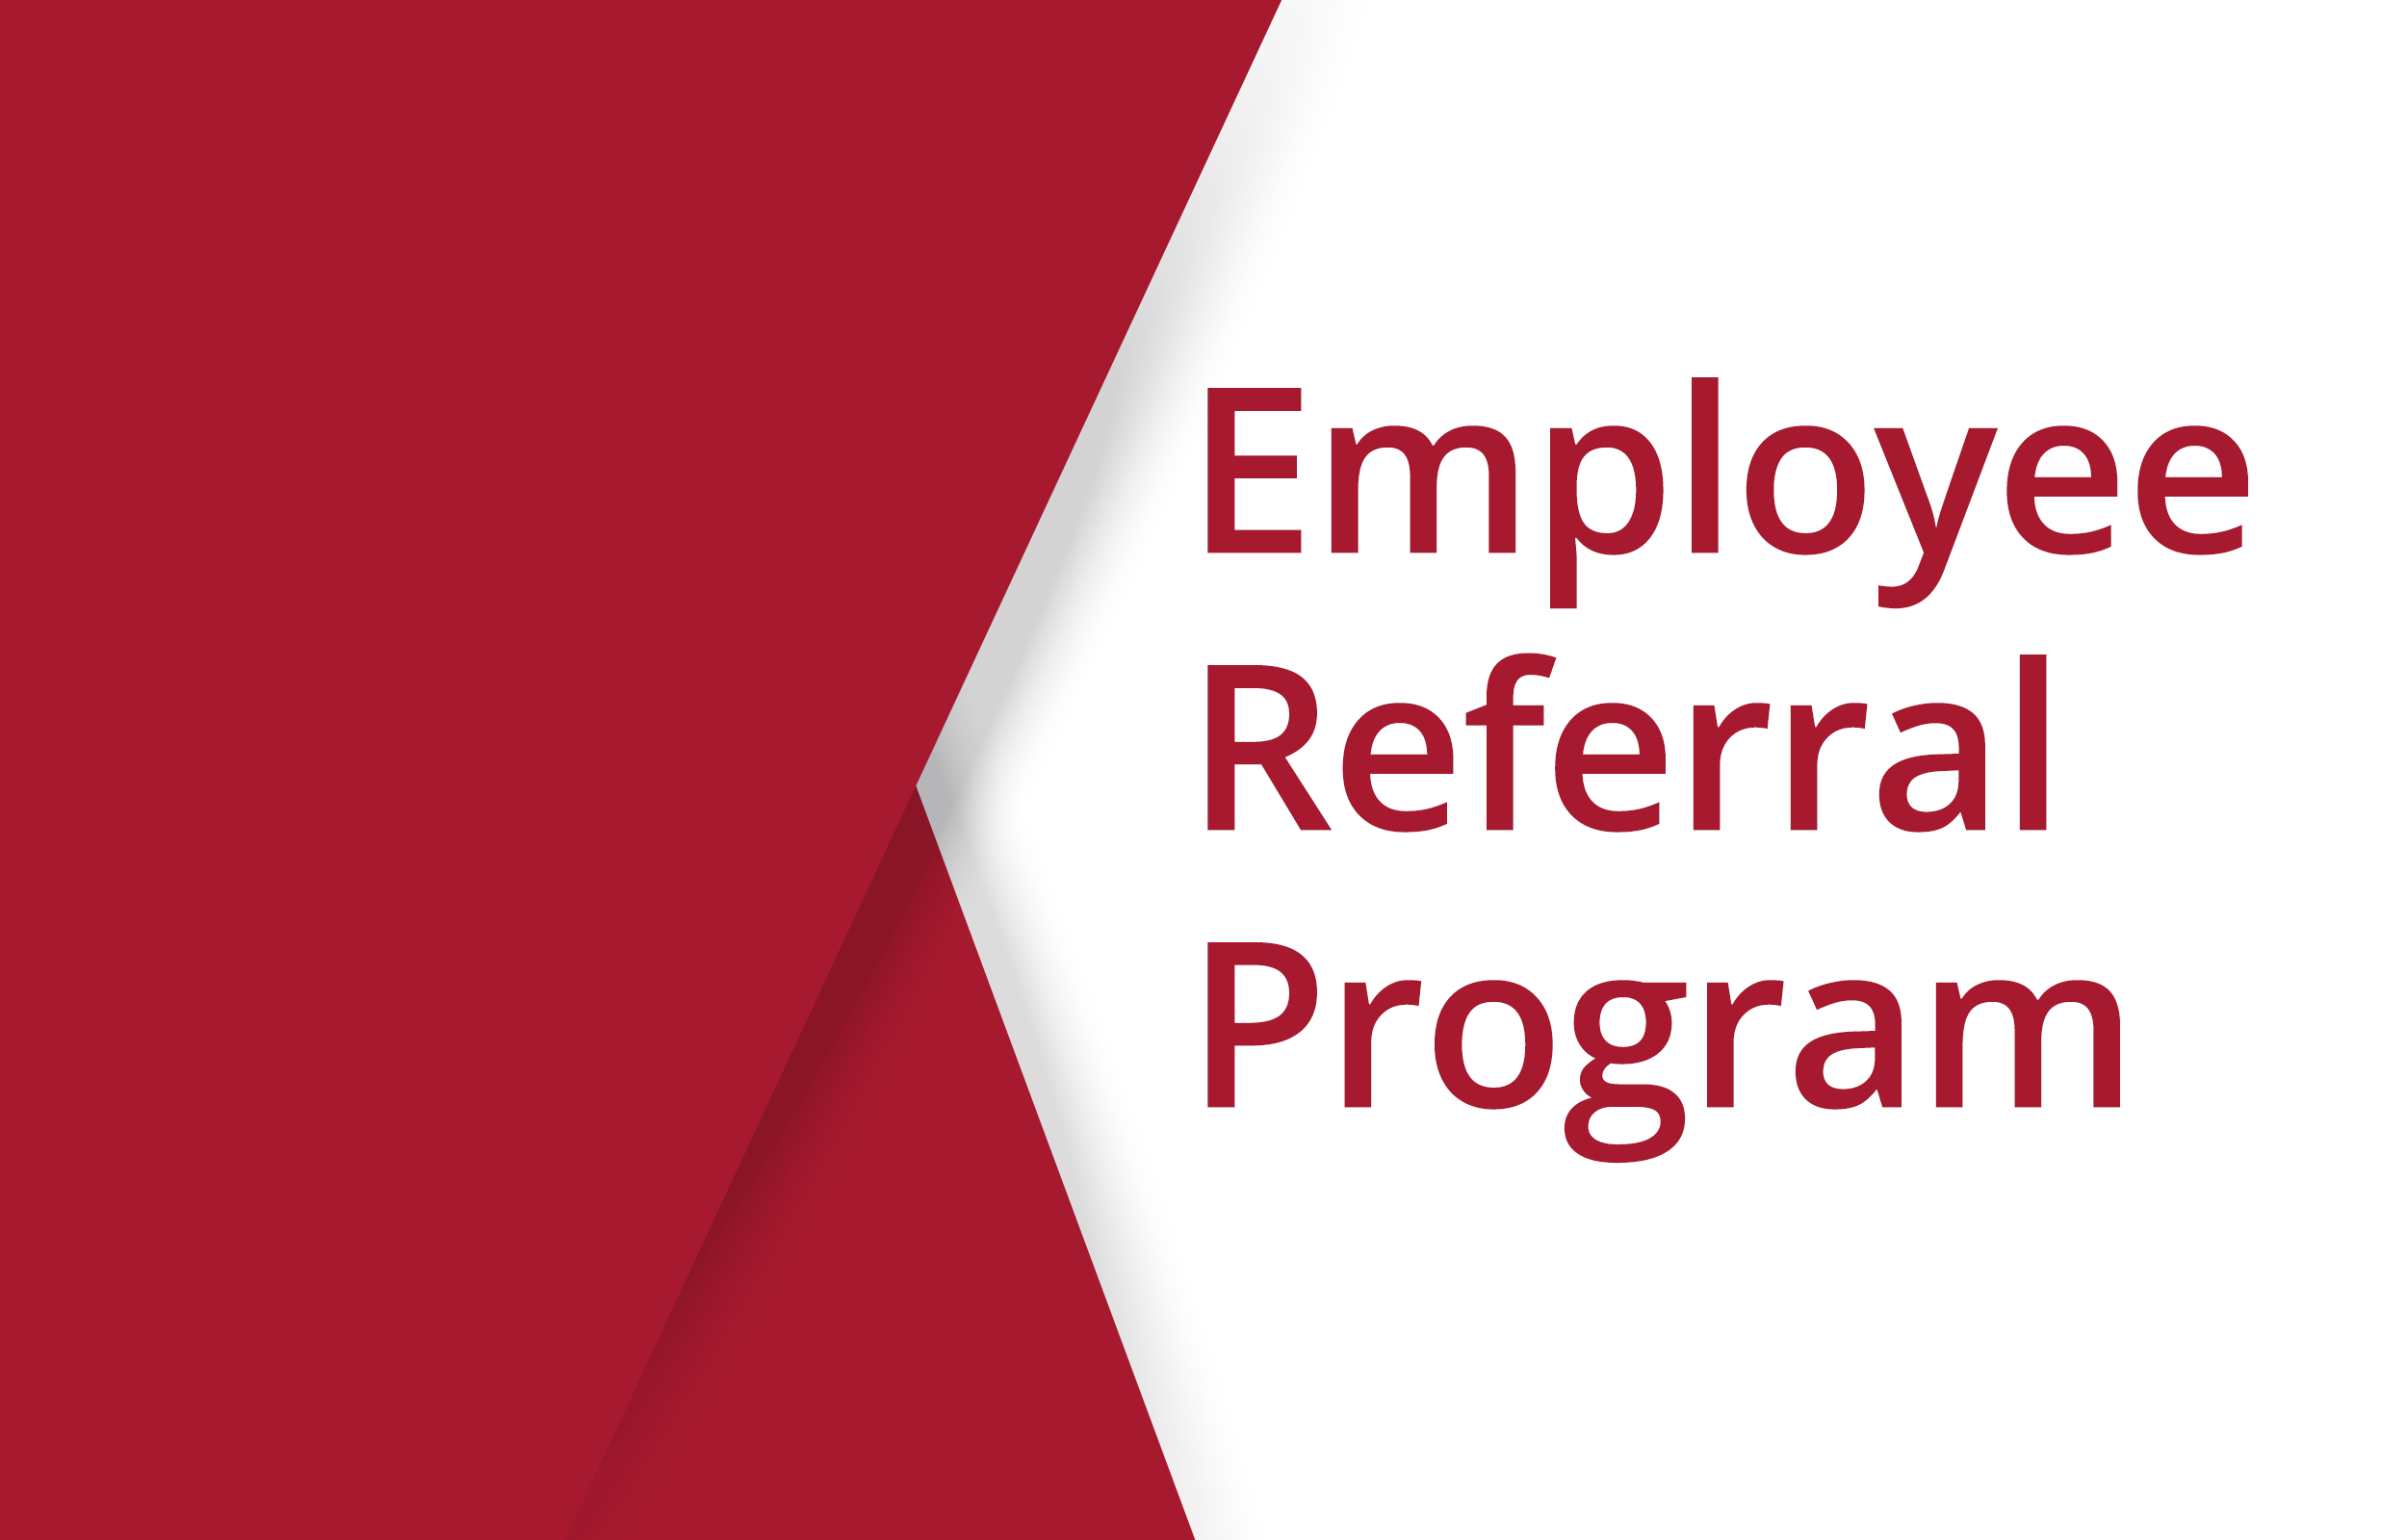 Employee Referral Program in Workday